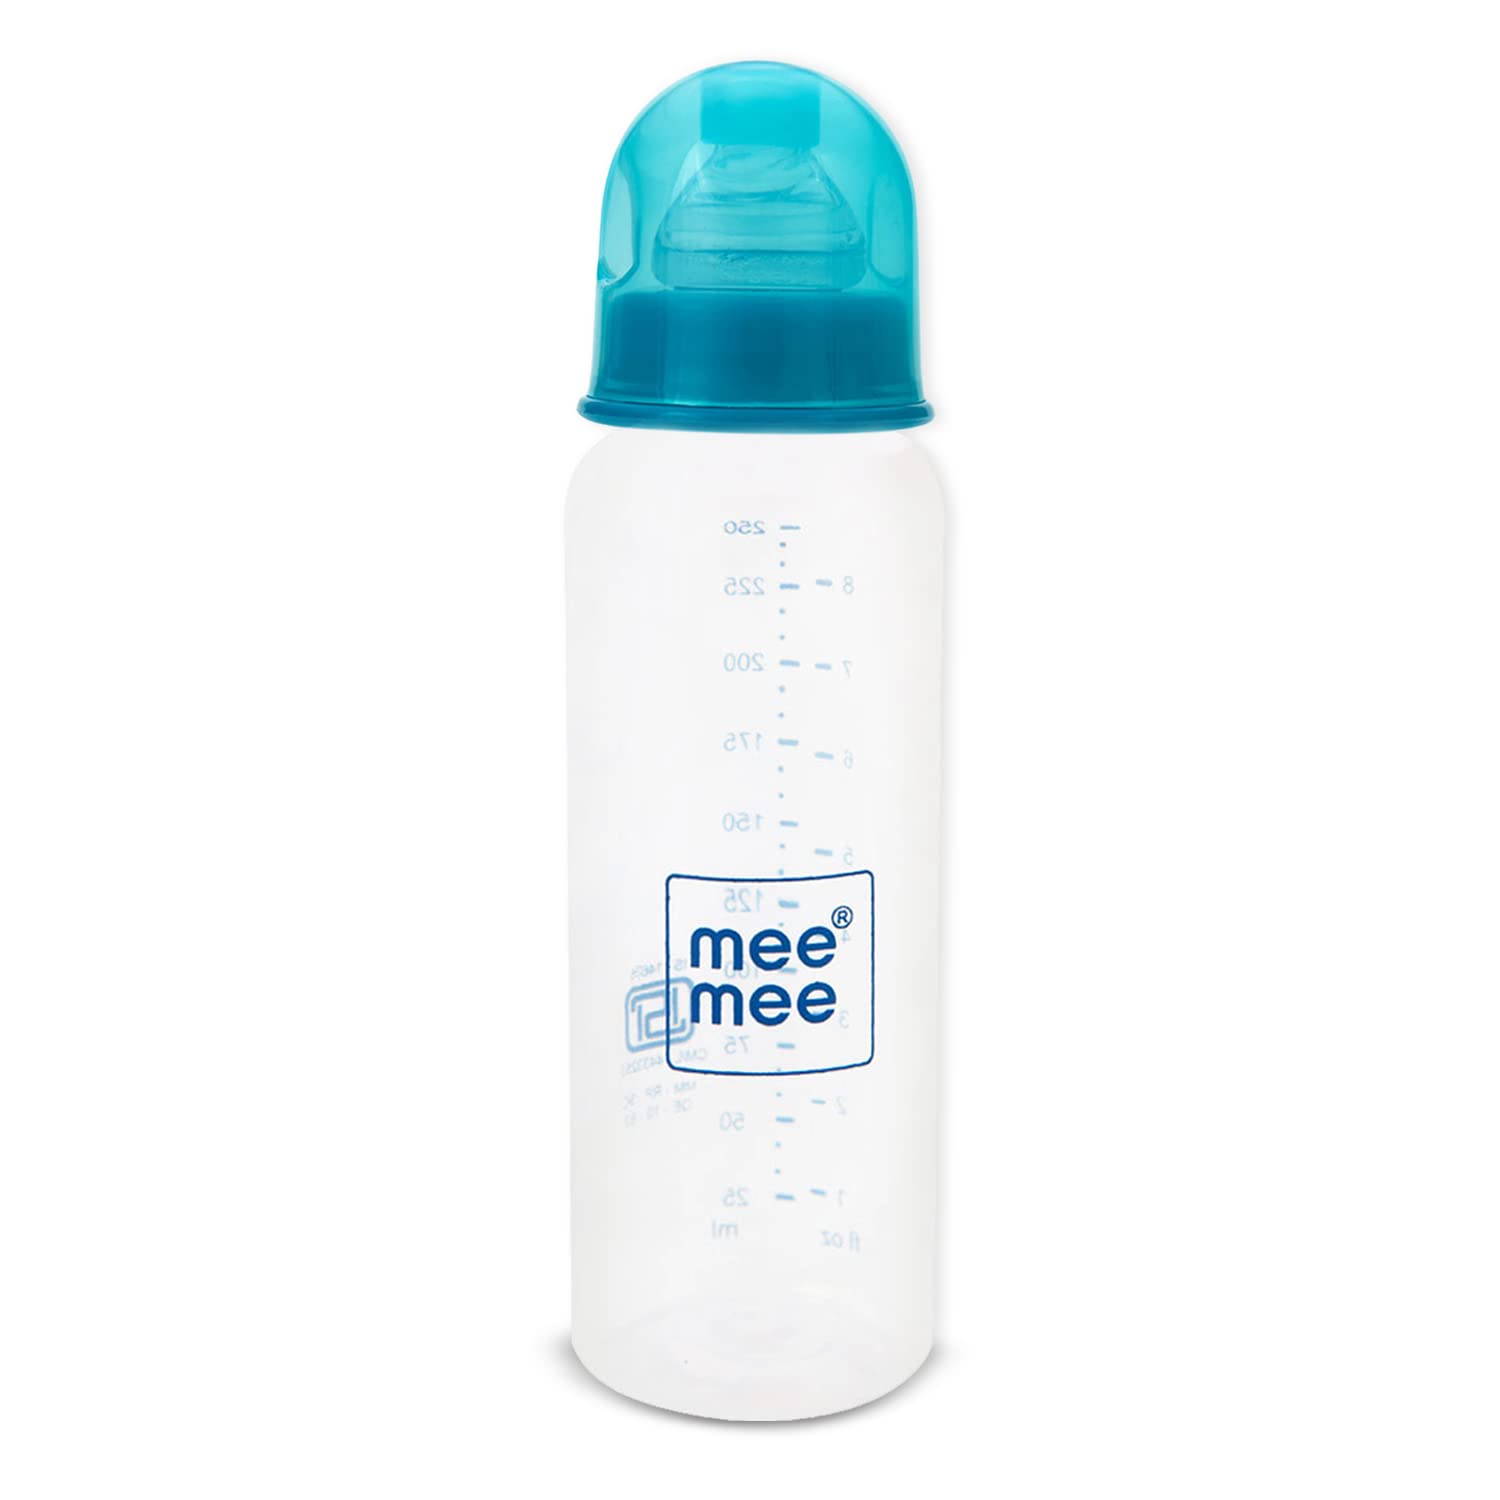 Mee Mee Premium Baby Feeding Bottle (Blue -250ml)